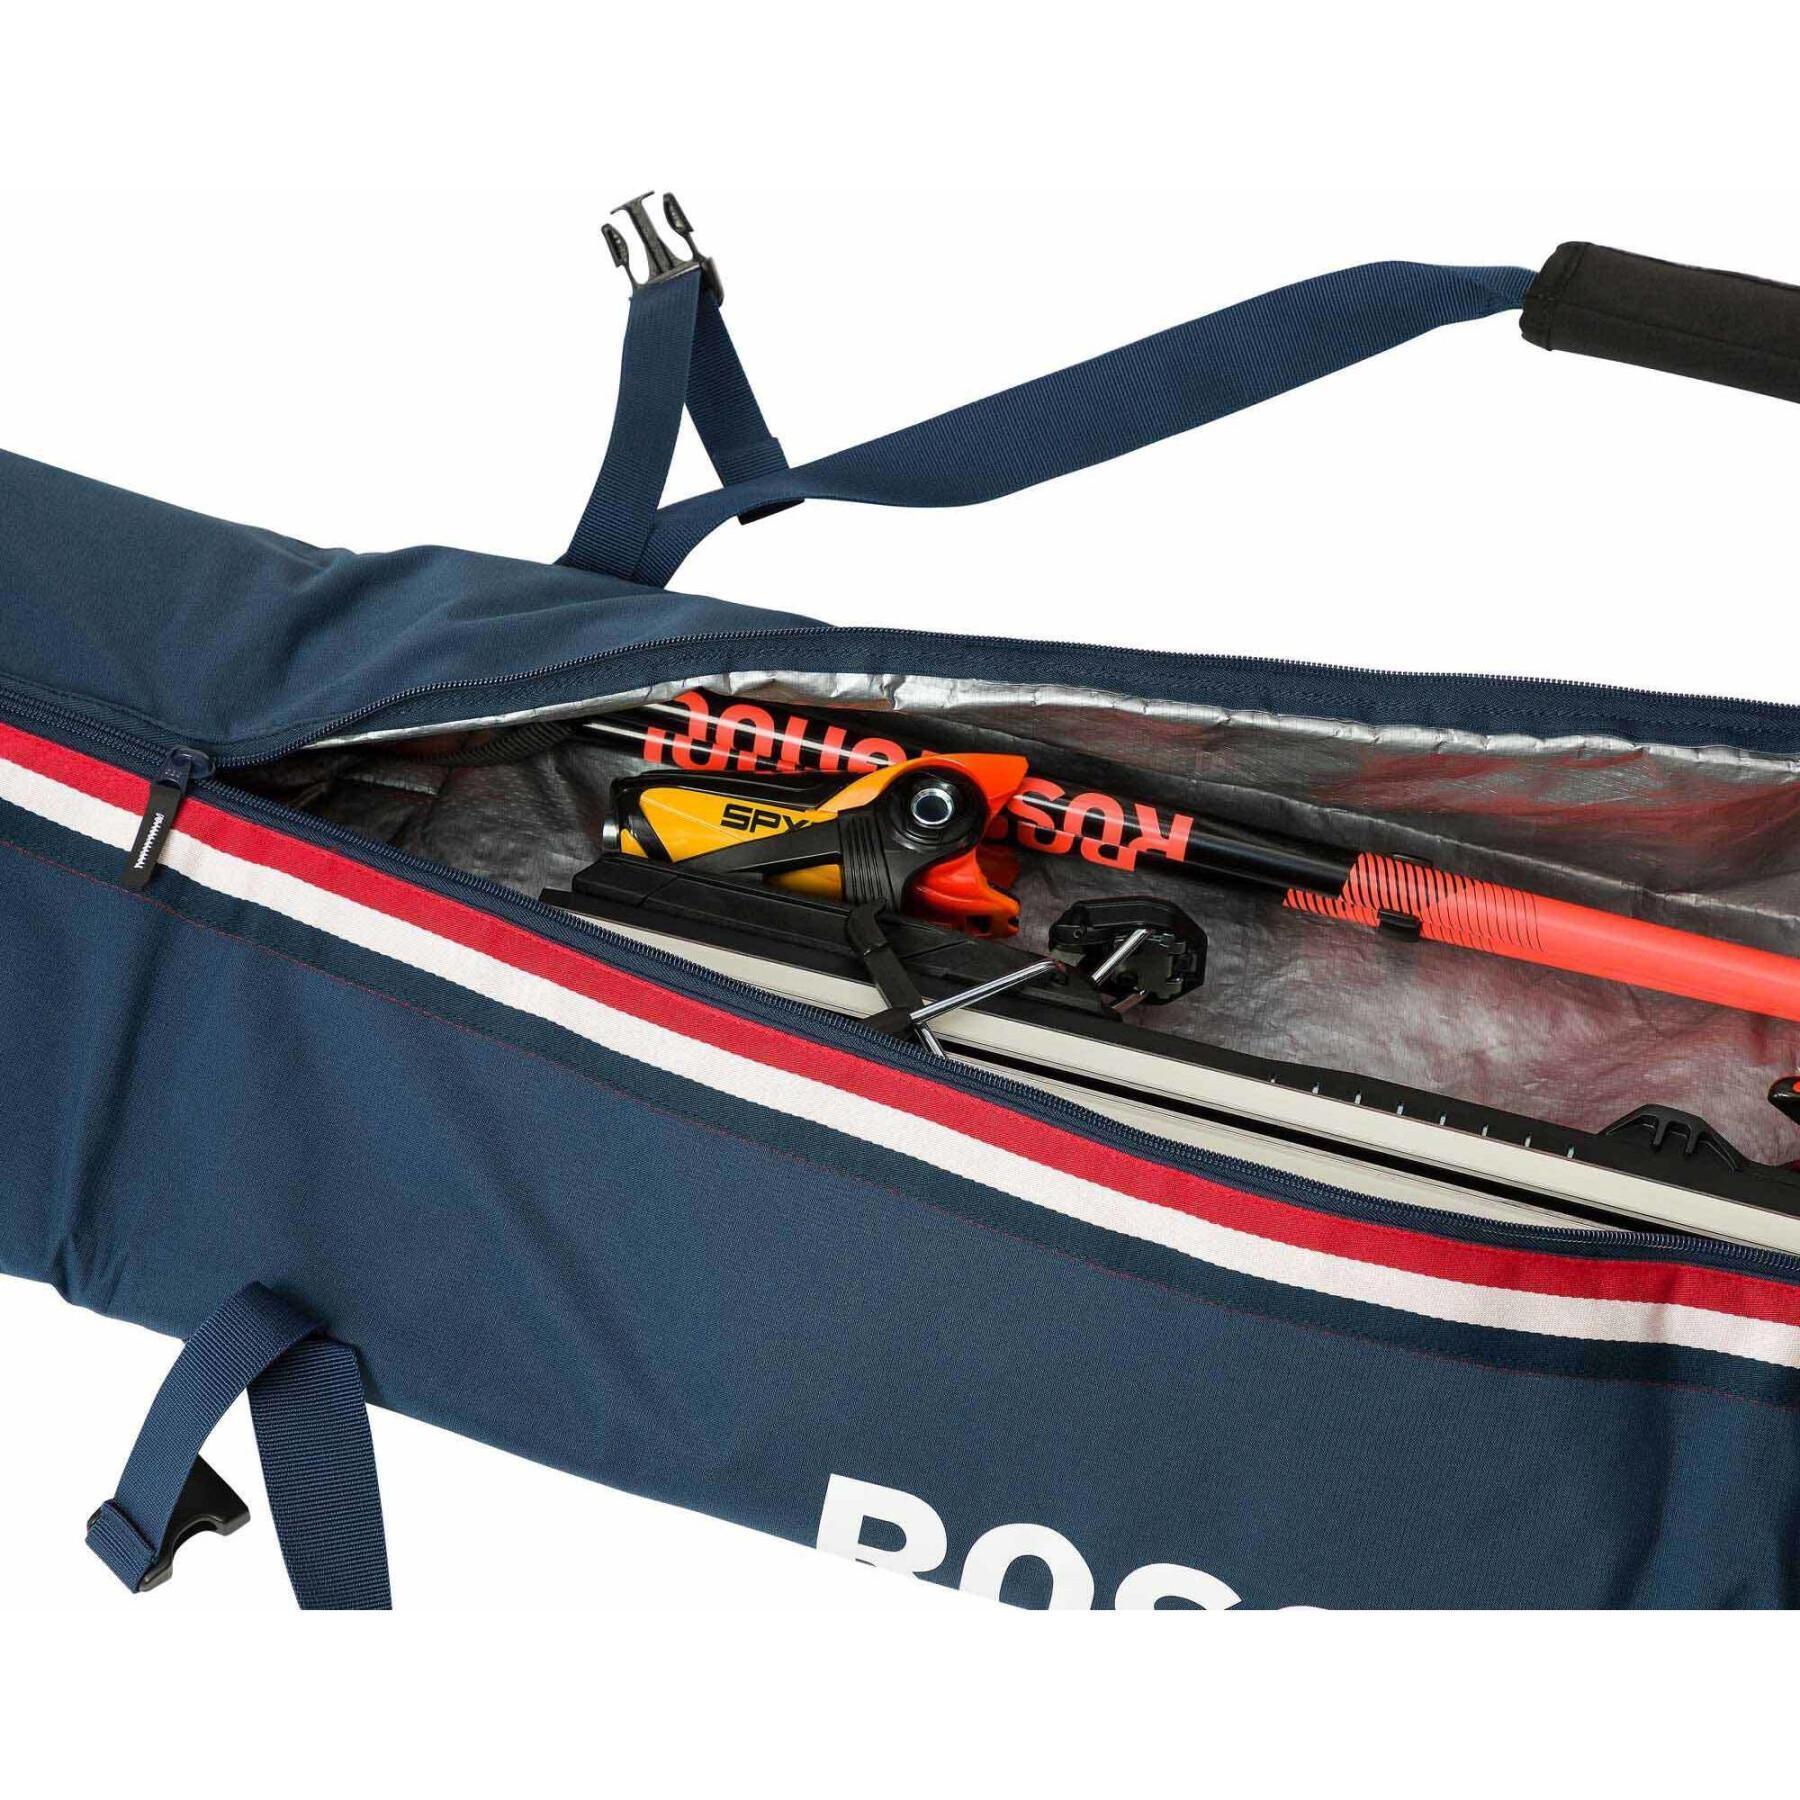 Gewatteerde ski tas Rossignol Strato EXT 1P160-210